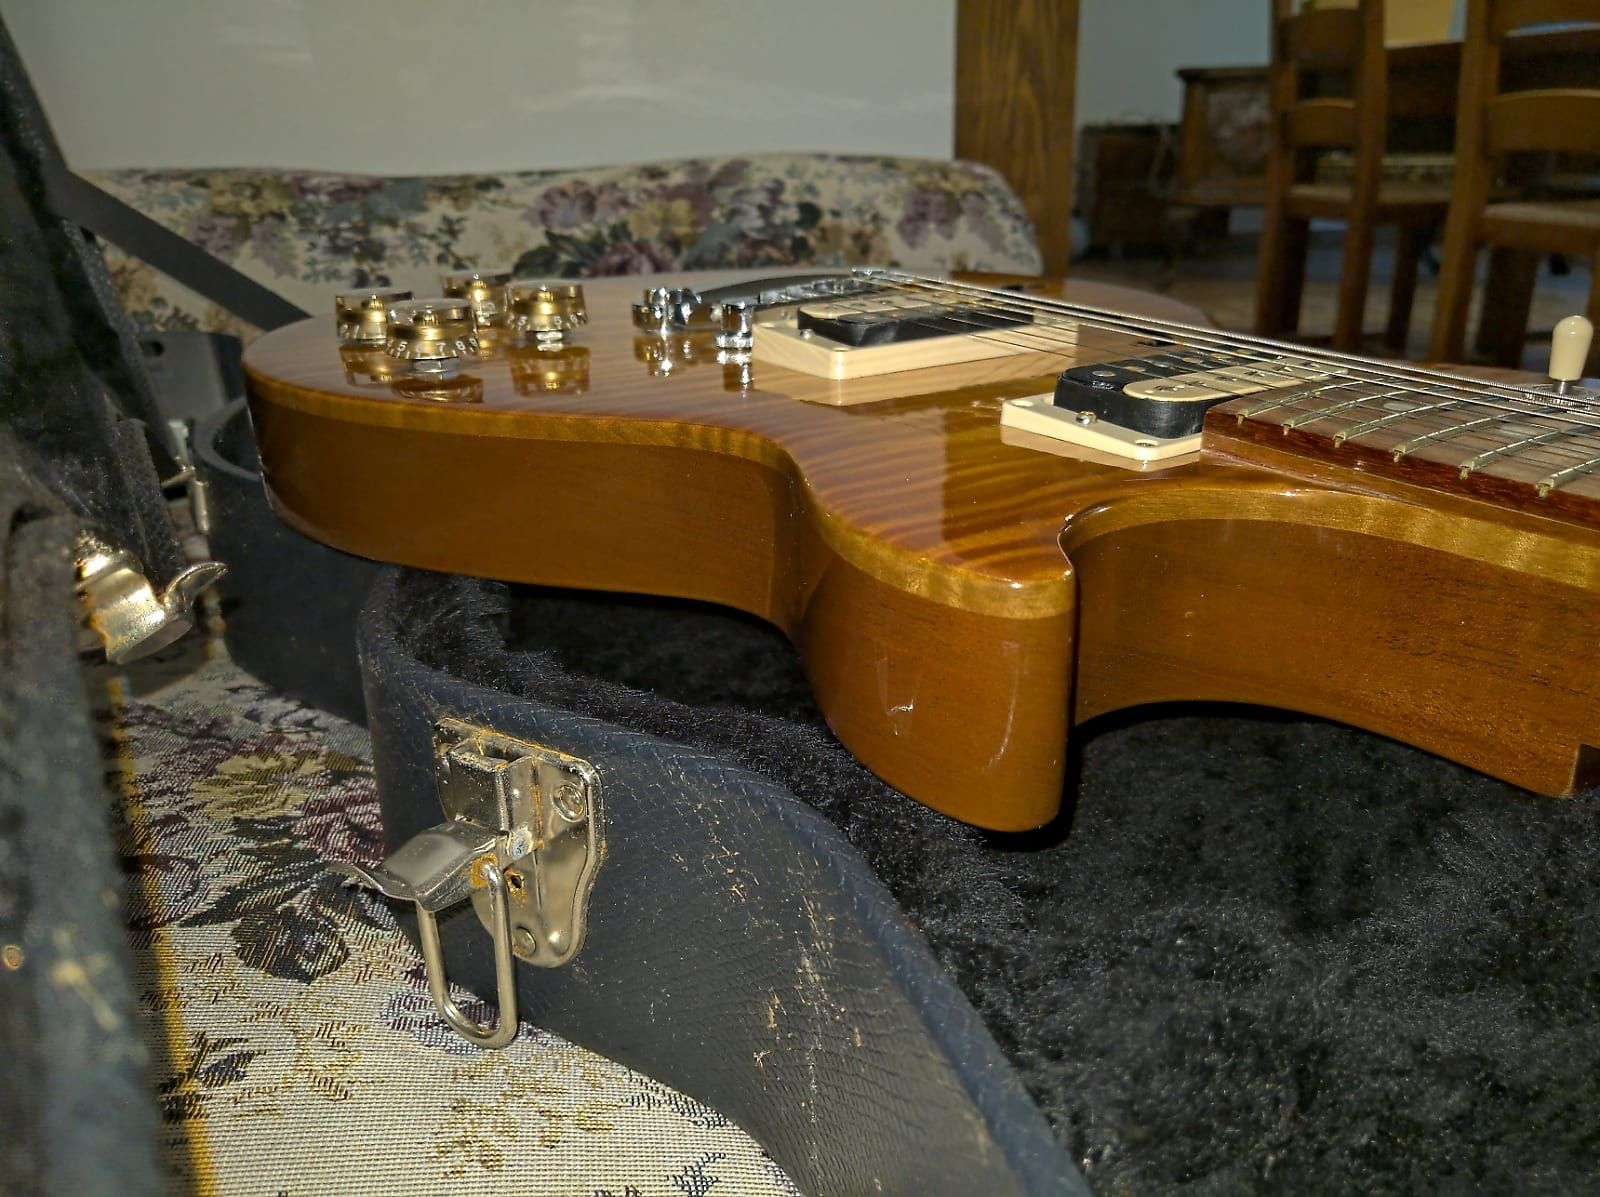 Gibson ES-Les Paul semi-hollow special 2014 chitara electrica limitat